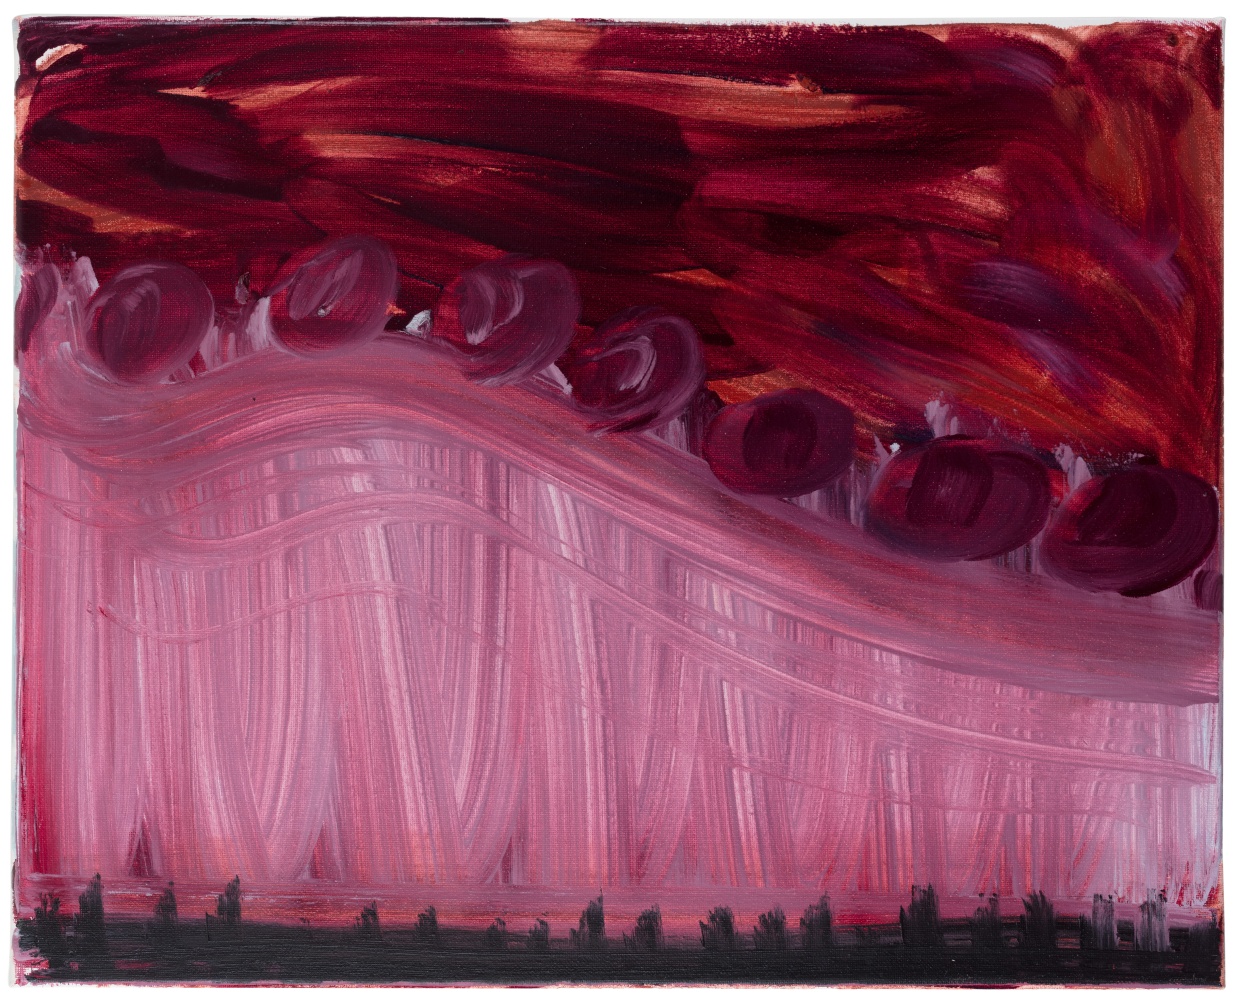 Peter Shear
Circulation
2019
Oil on canvas
16 x 20 inches (40.6 x 50.8 cm)

&amp;nbsp;

INQUIRE